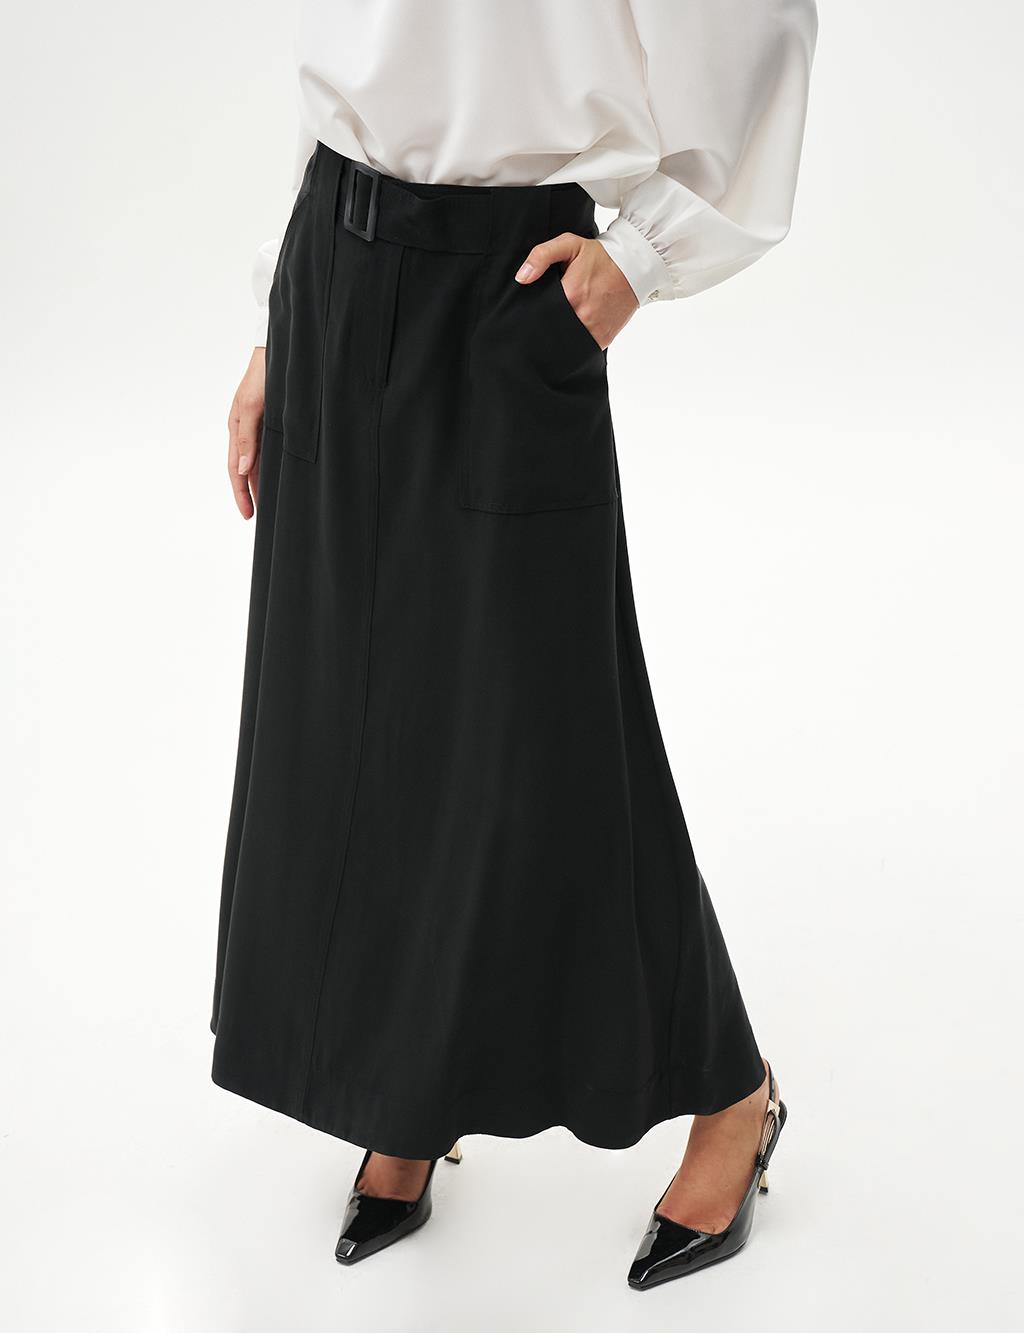 Bell Skirt with Pocket Detail in Black